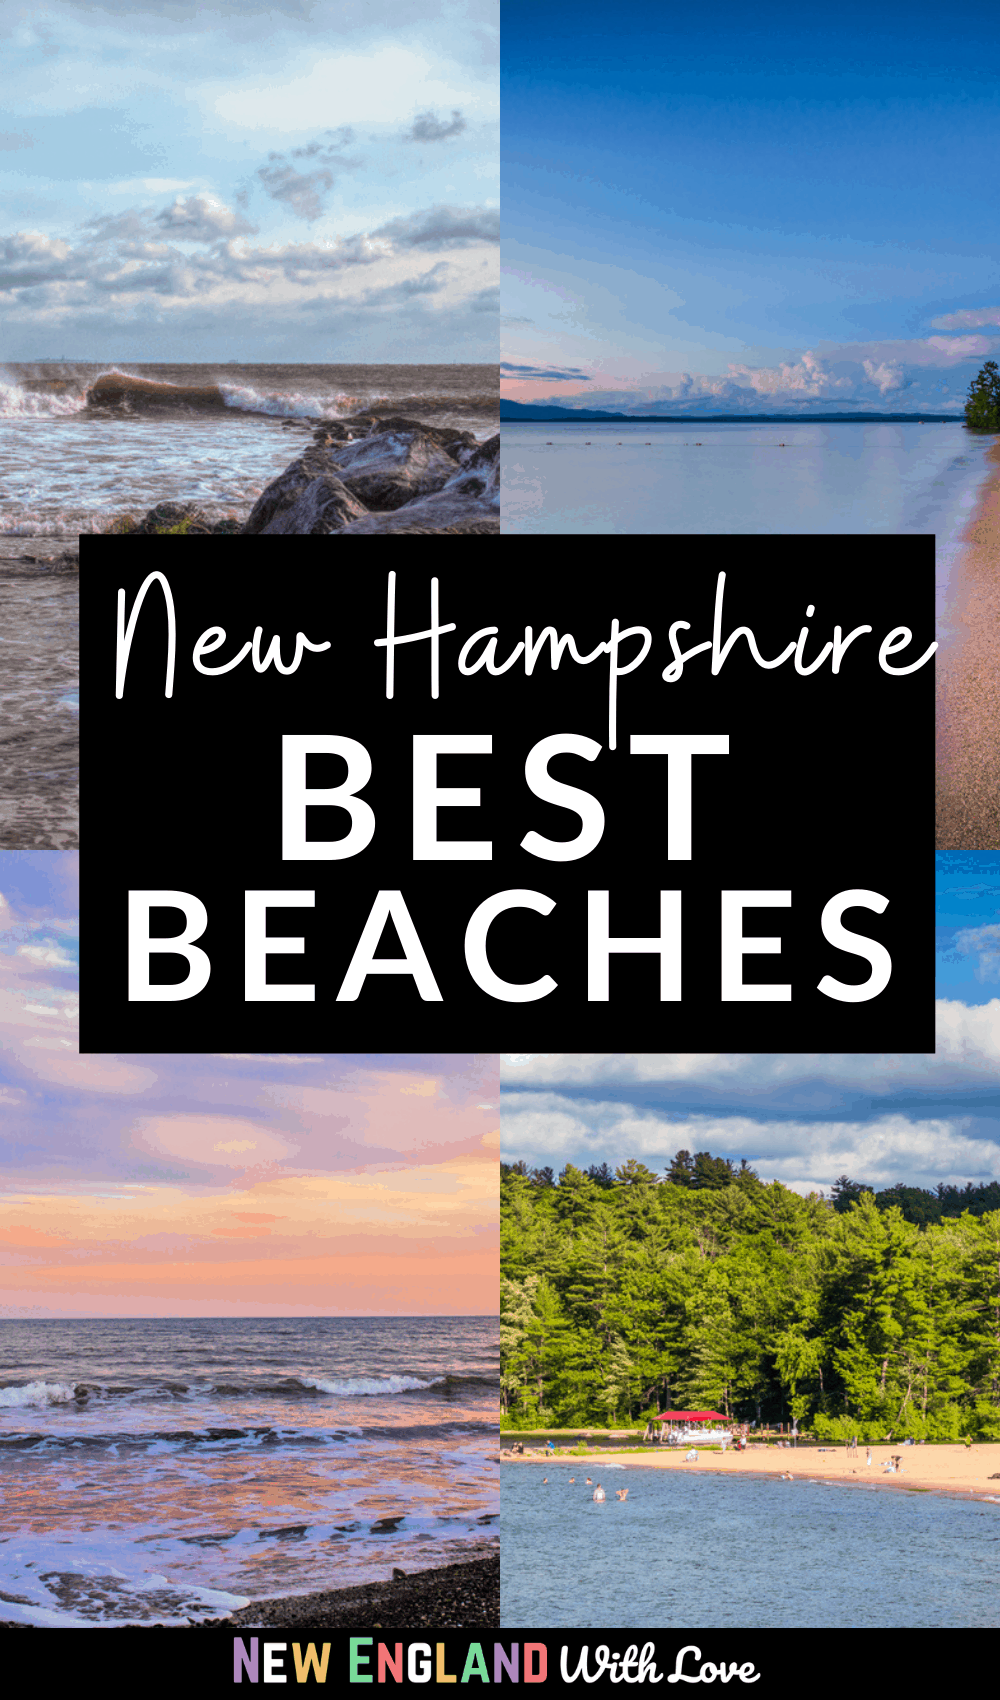 Pinterest graphic reading "New Hampshire Best Beaches"